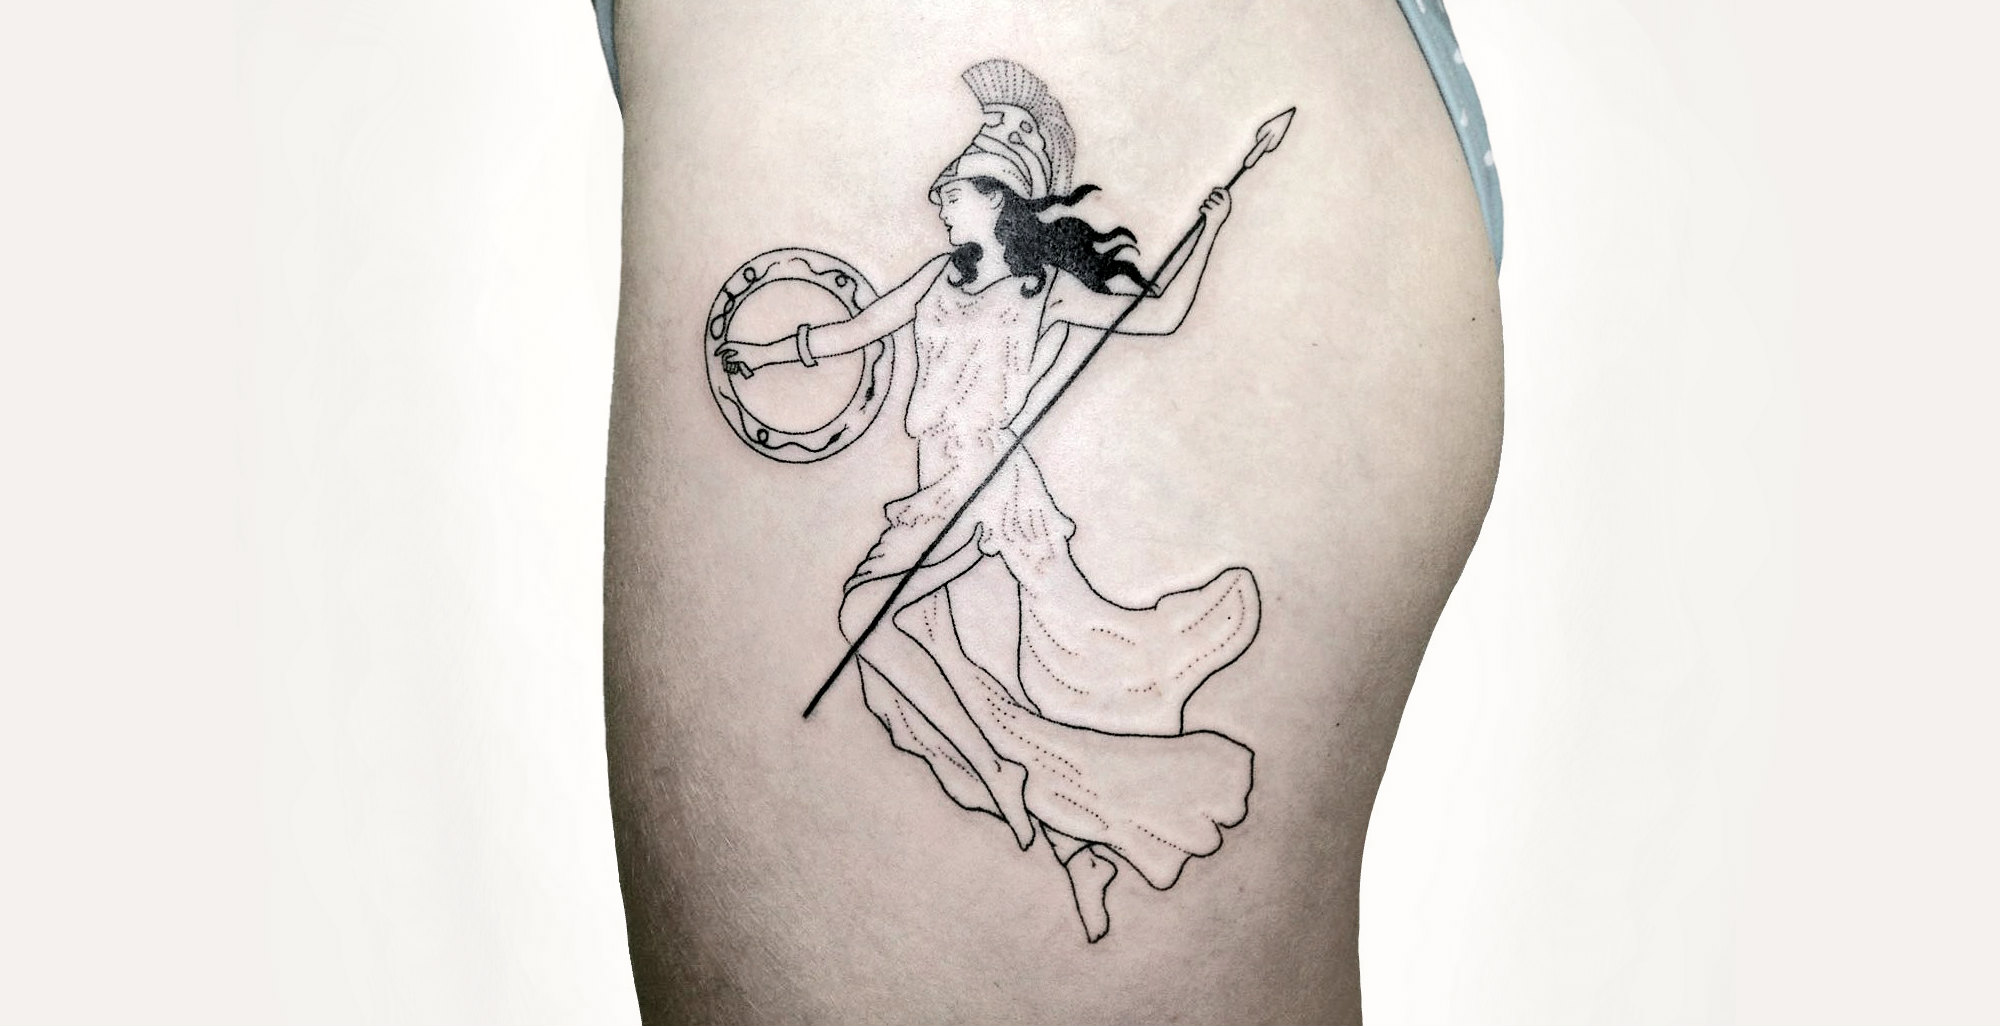 Warrior Athena handpoke tattoo by Tati Compton